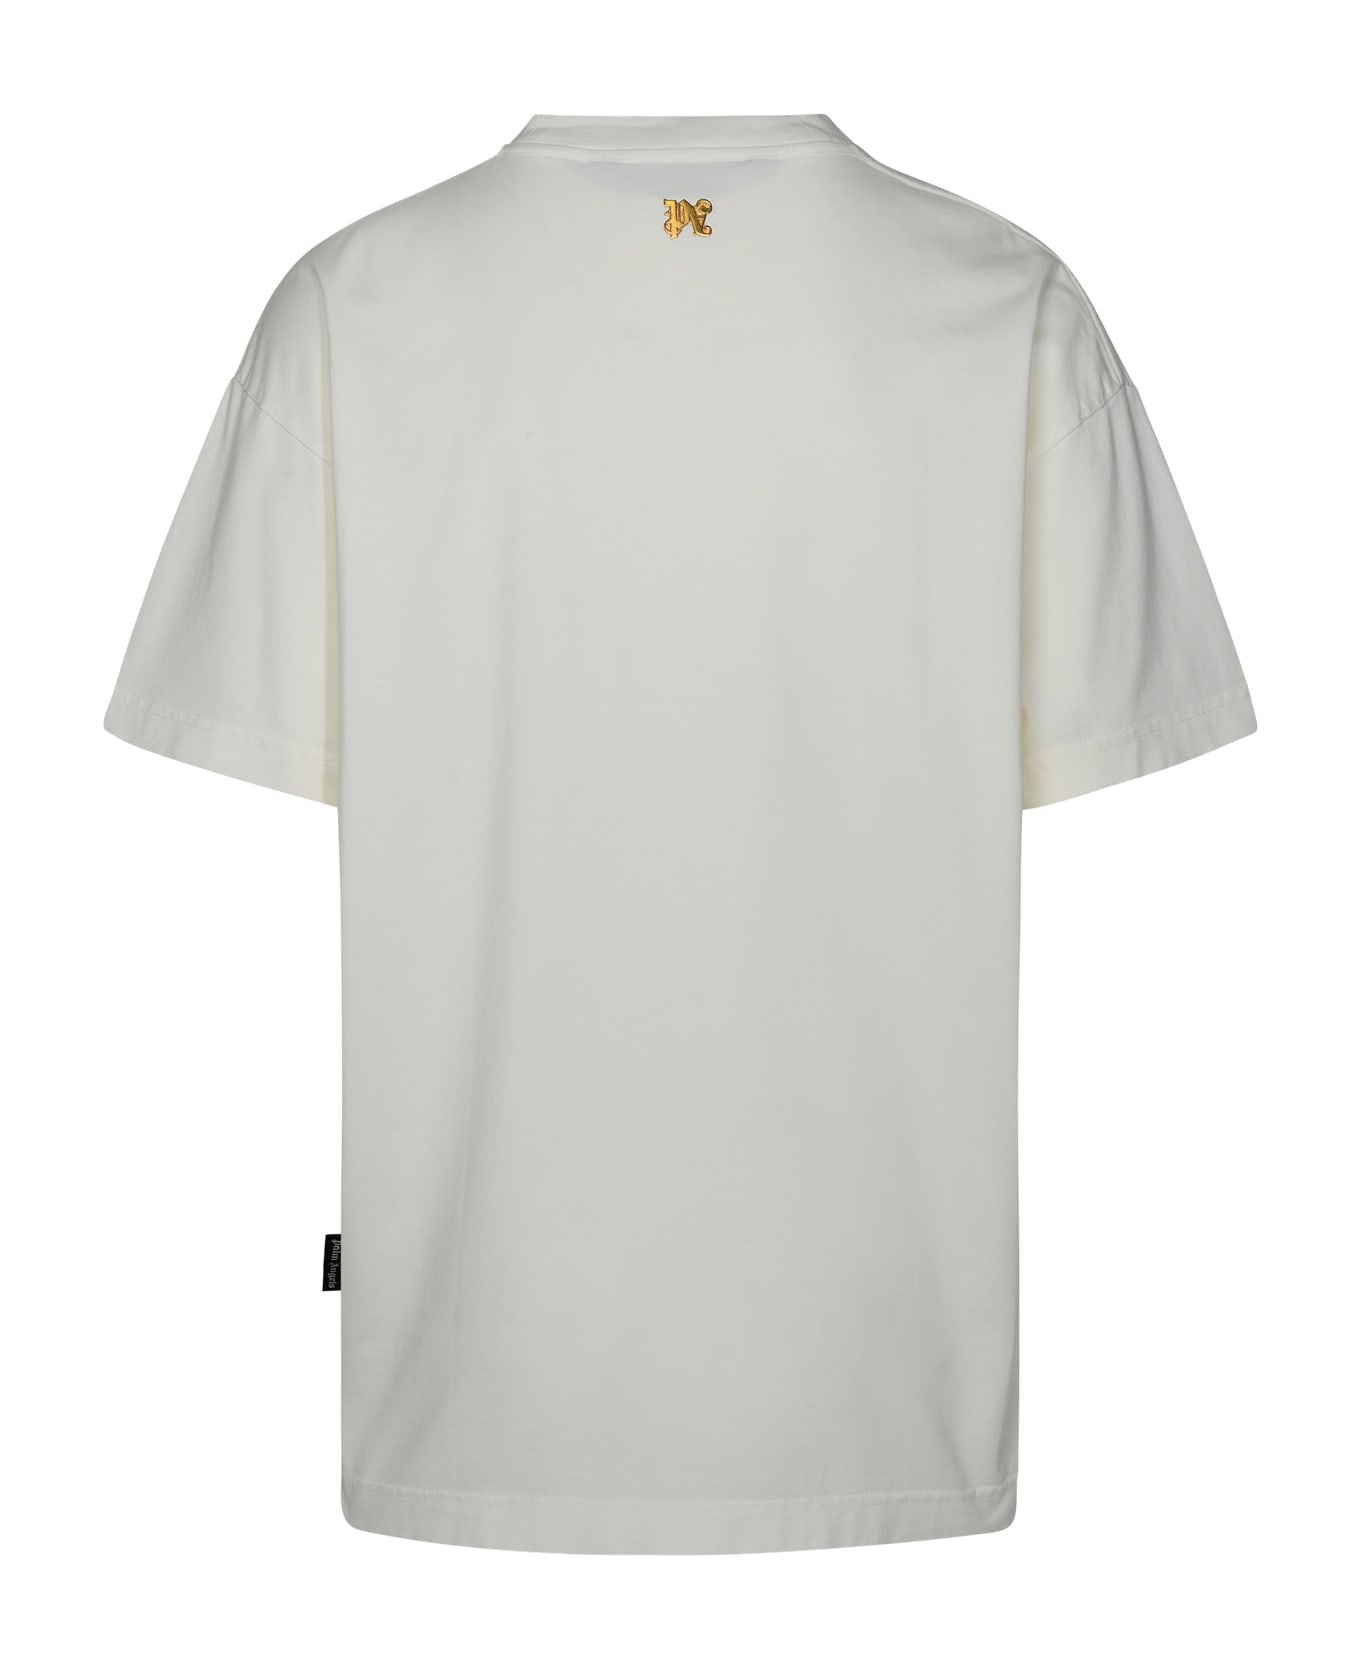 Palm Angels Burning Monogram T-shirt - Off white gold Tシャツ